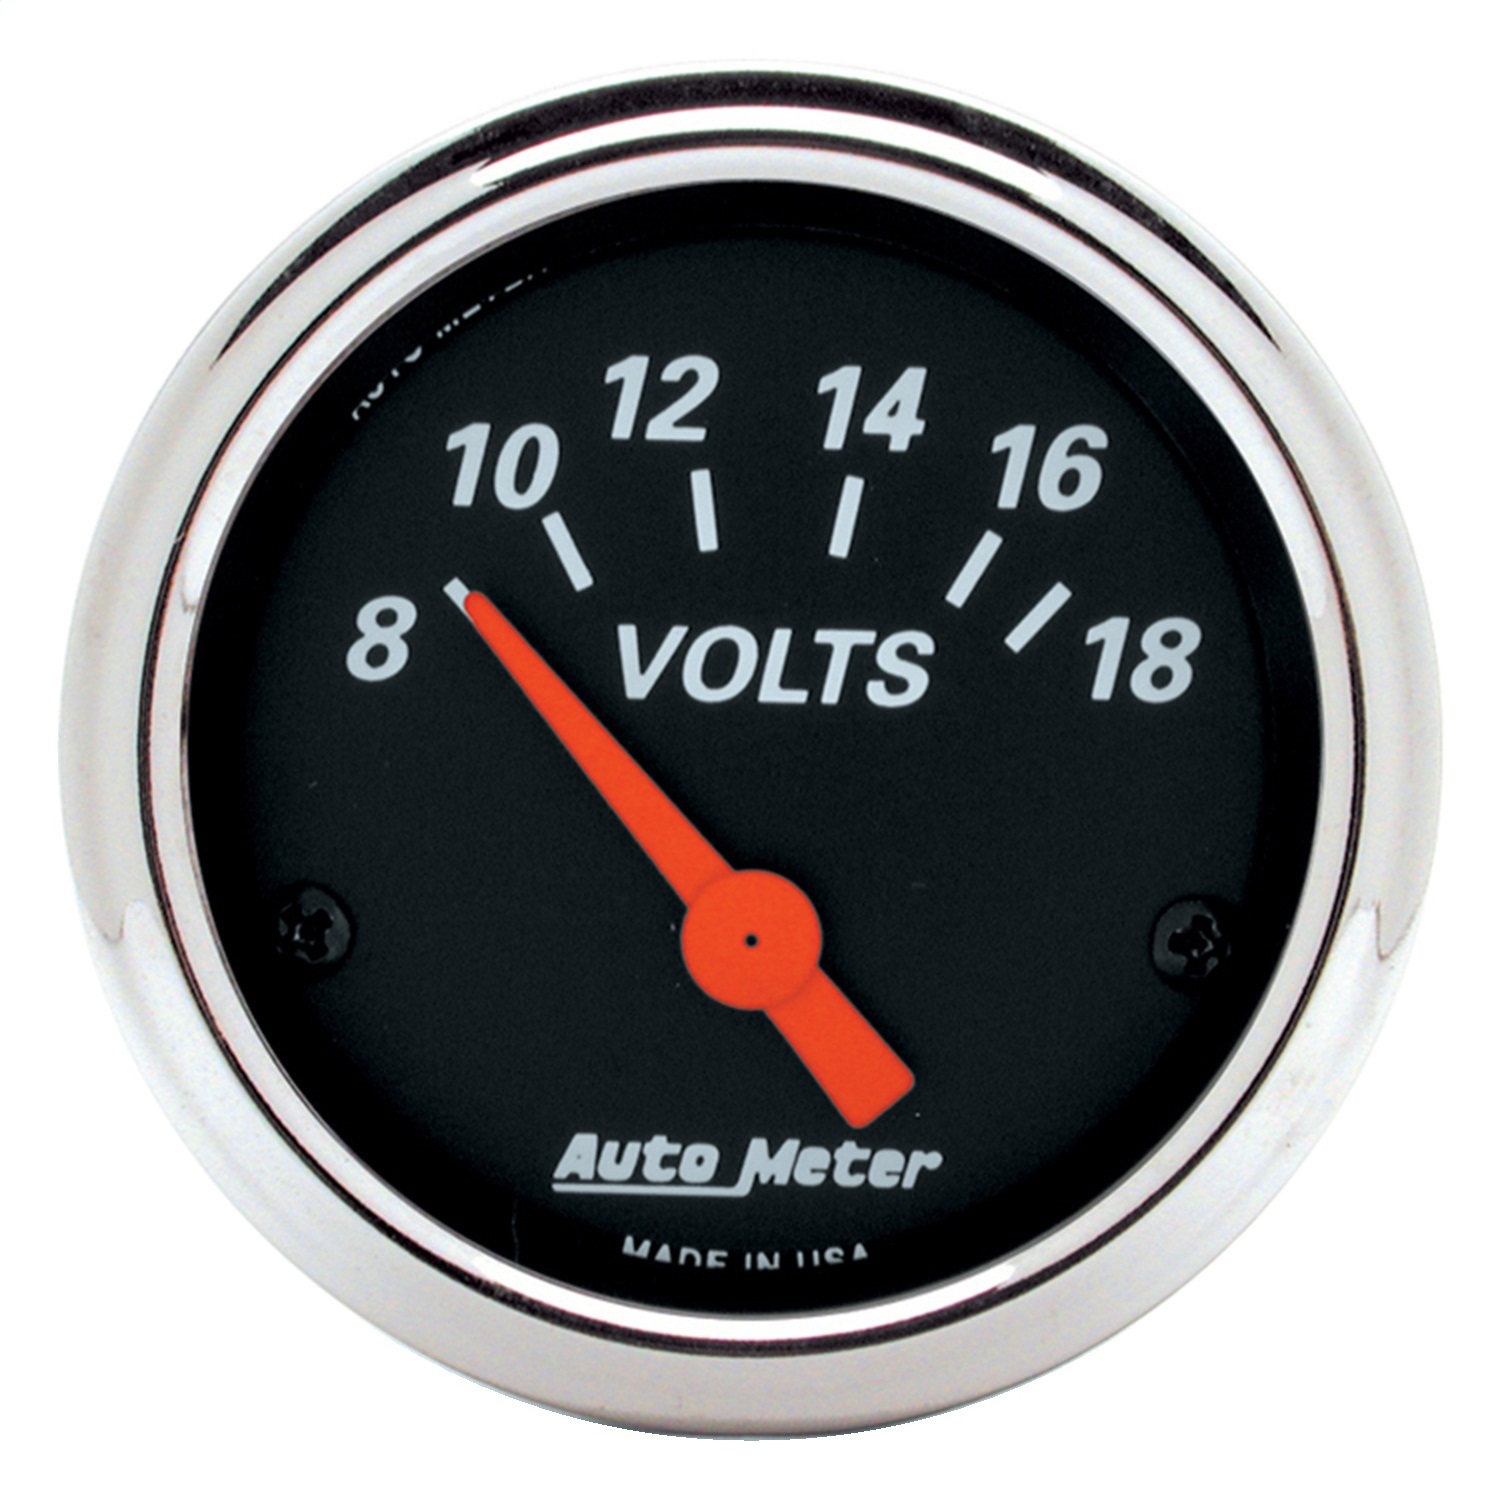 Auto Meter Auto Meter 1483 Designer Black; Voltmeter Gauge